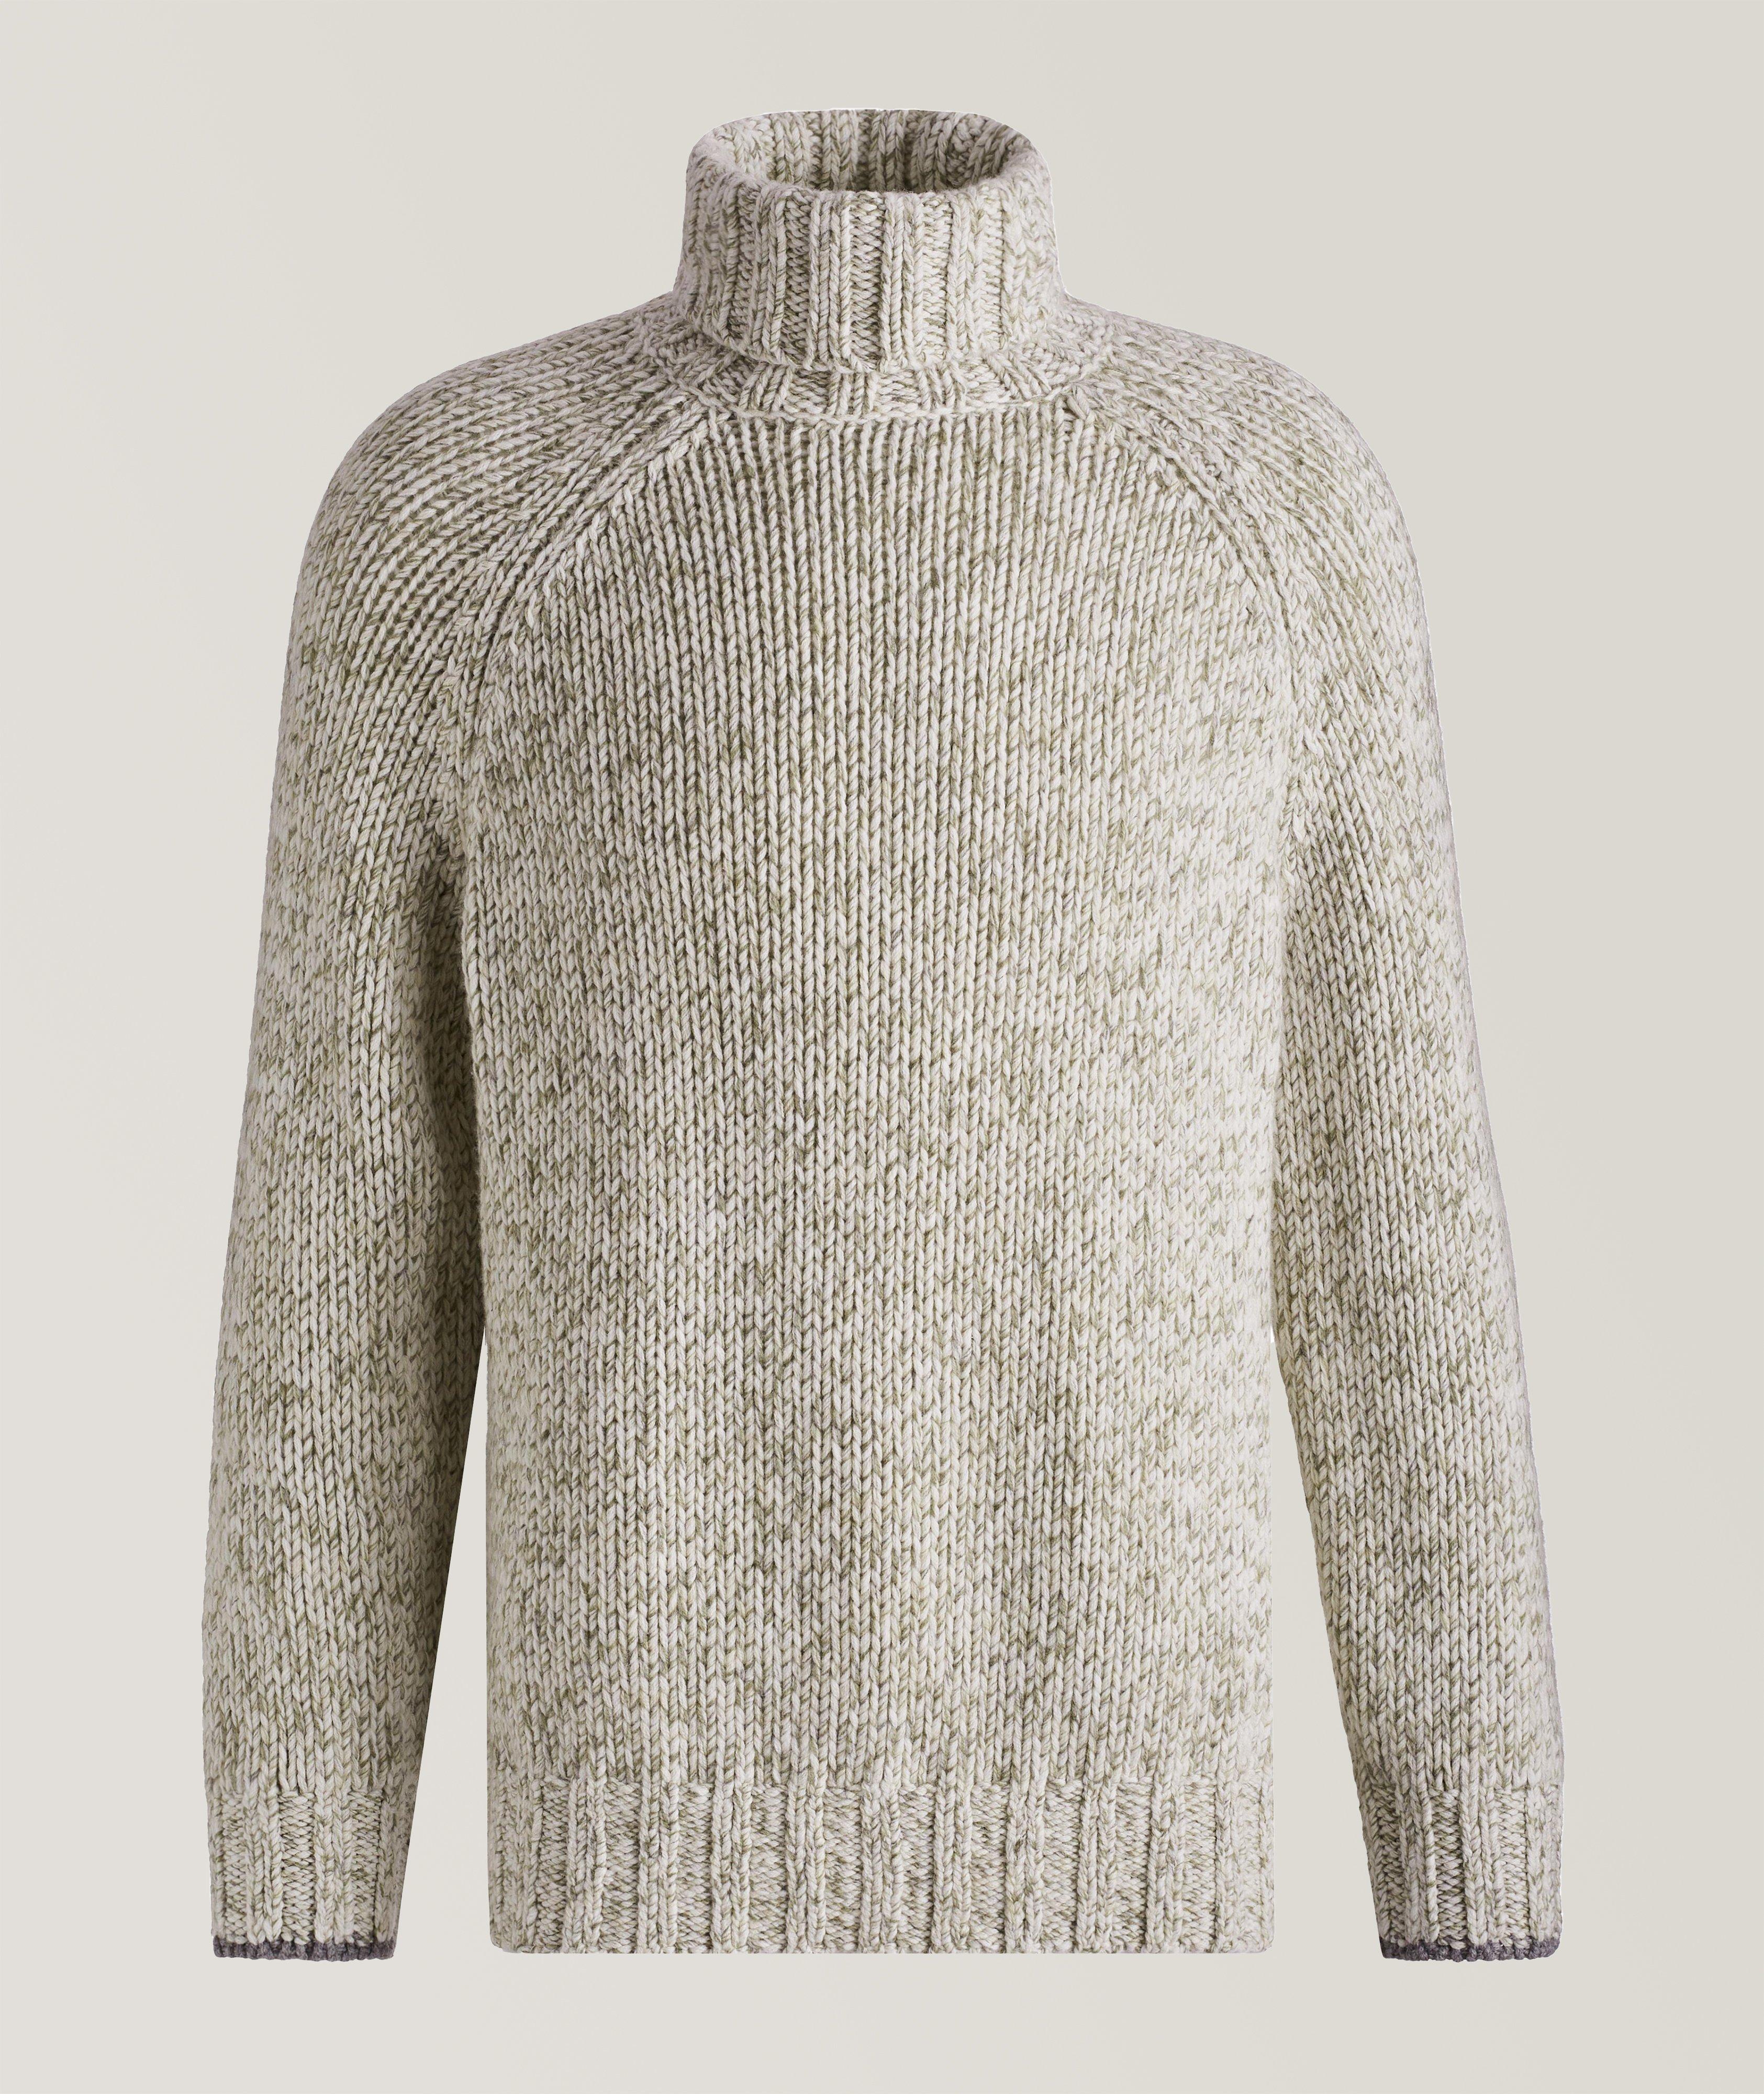 Wool-Cashmere-Silk Knit Turtleneck image 0